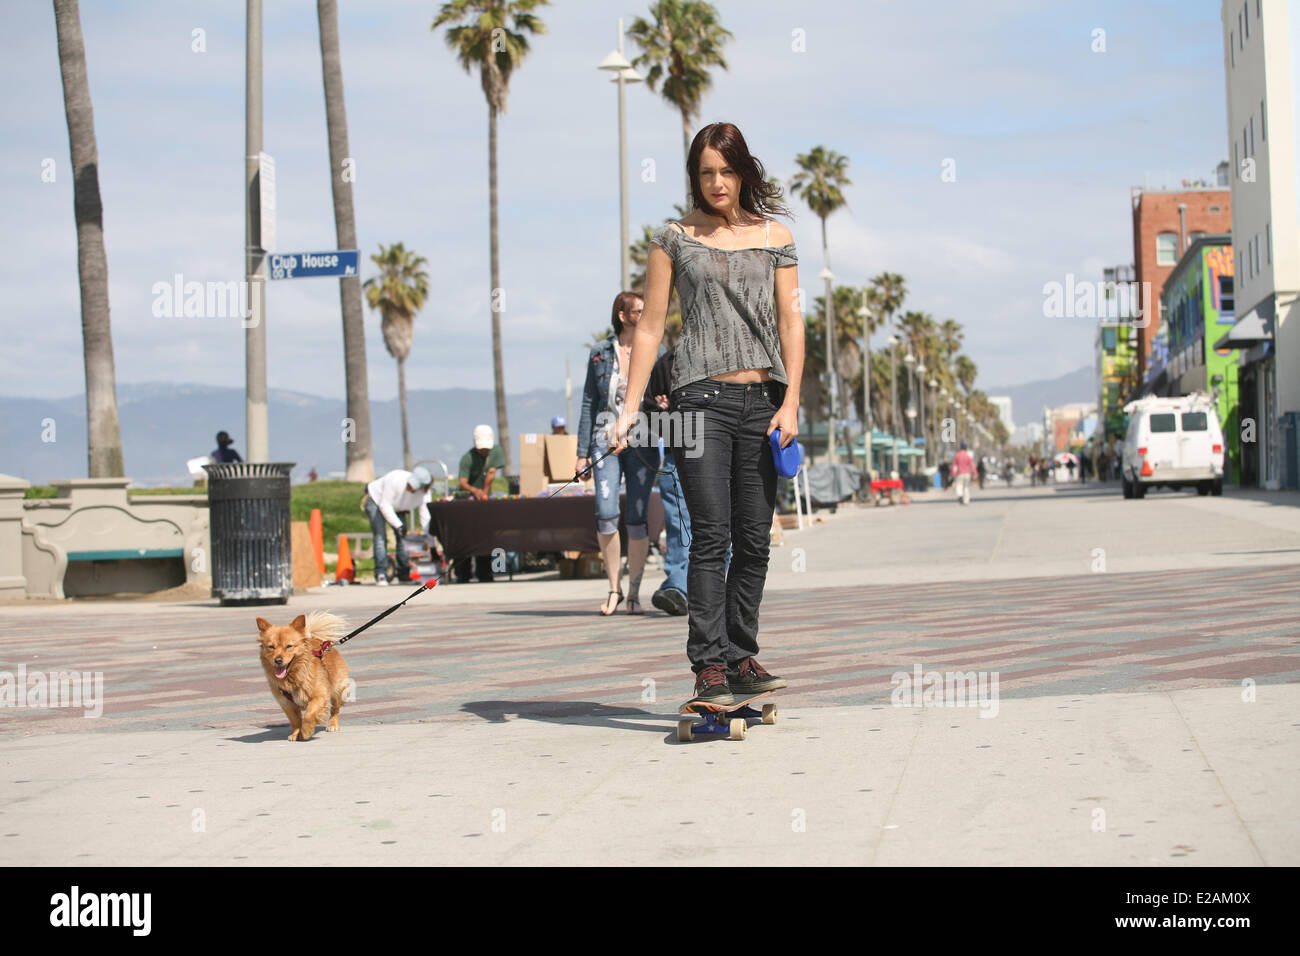 United States, California, Los Angeles, Venice Beach, girl skateboarding with dog Stock Photo